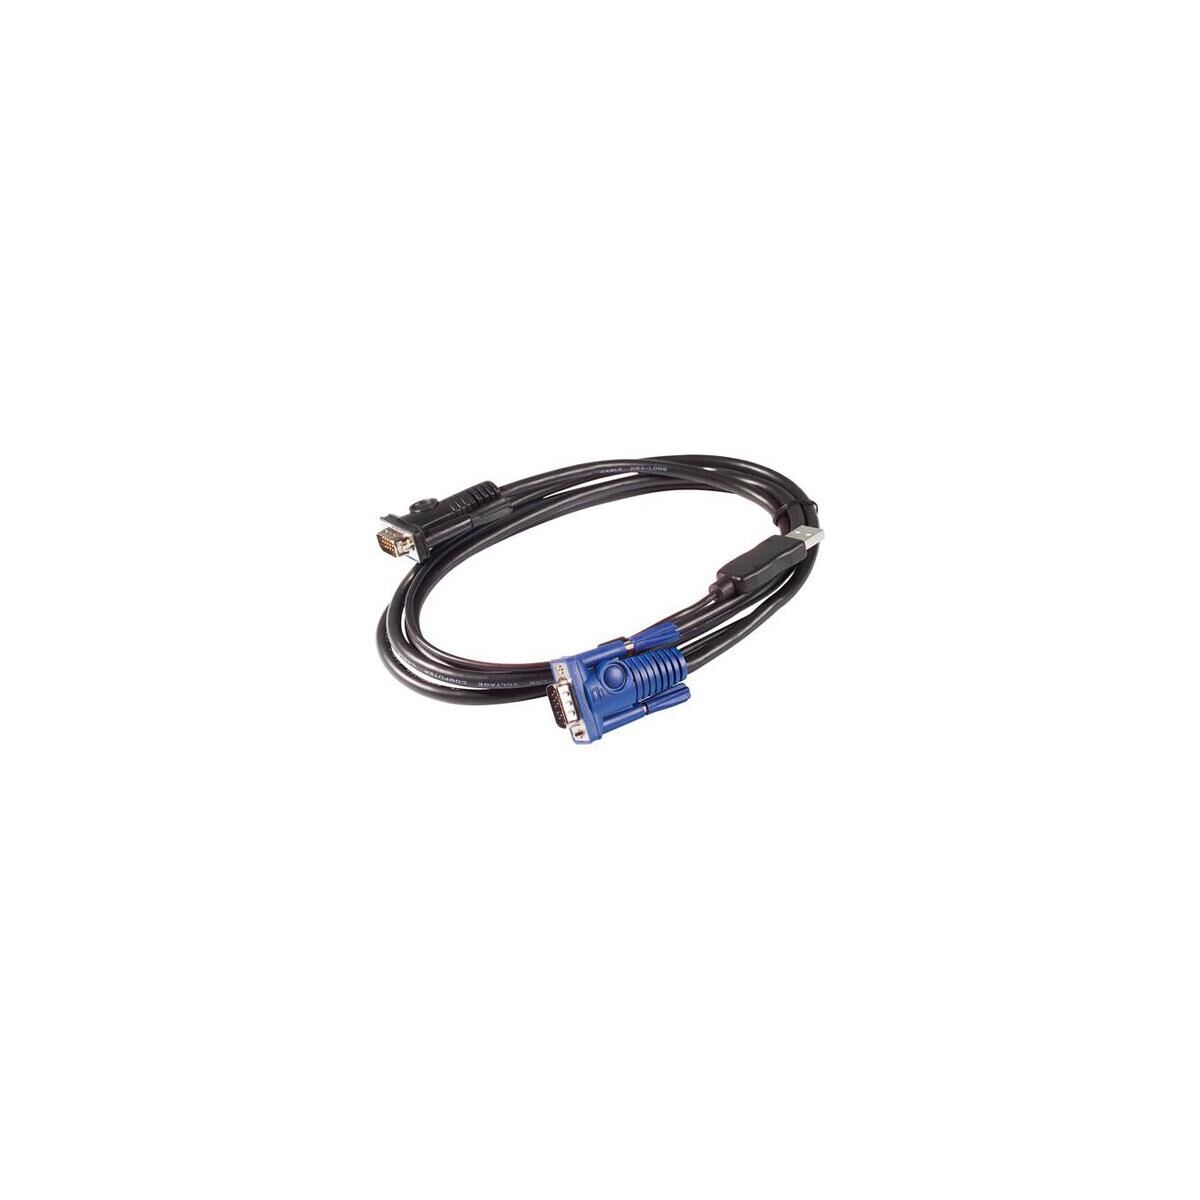 American Power Conversion (APC) APC 25' KVM USB Cable